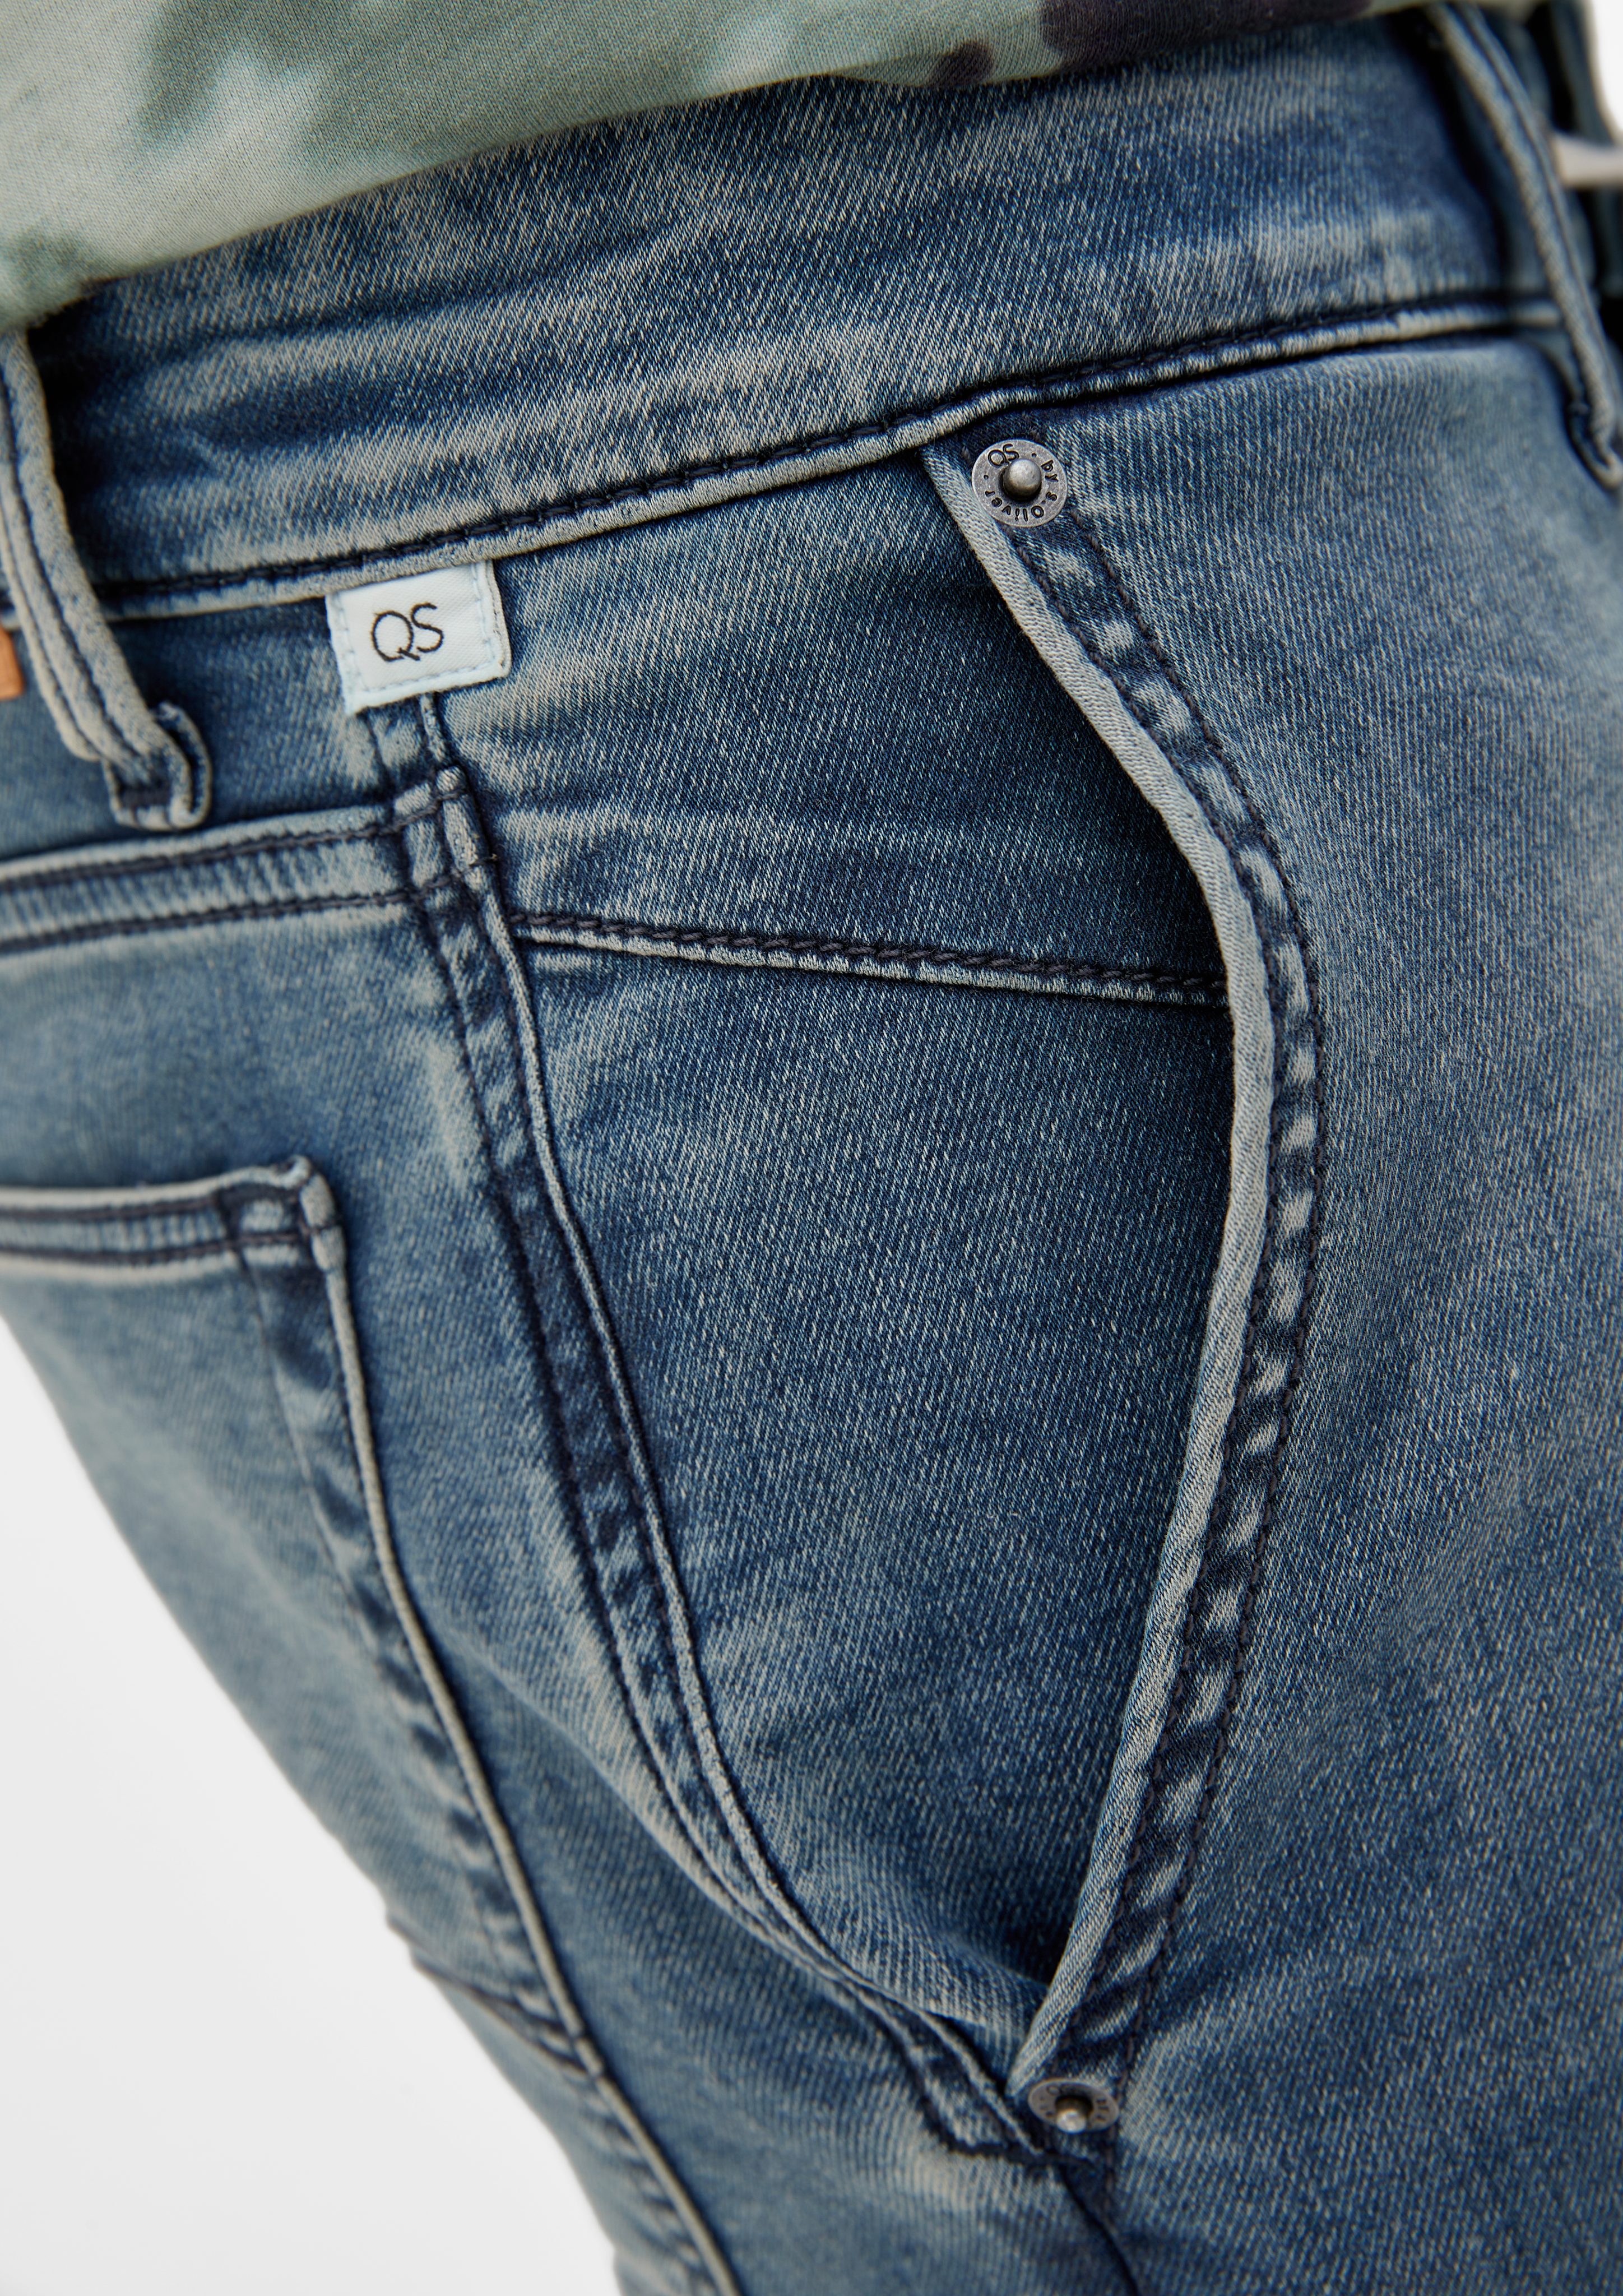 / Leg Straight Jeansshorts QS Regular Rise / Jeans-Shorts Waschung himmelblau John / Fit Mid